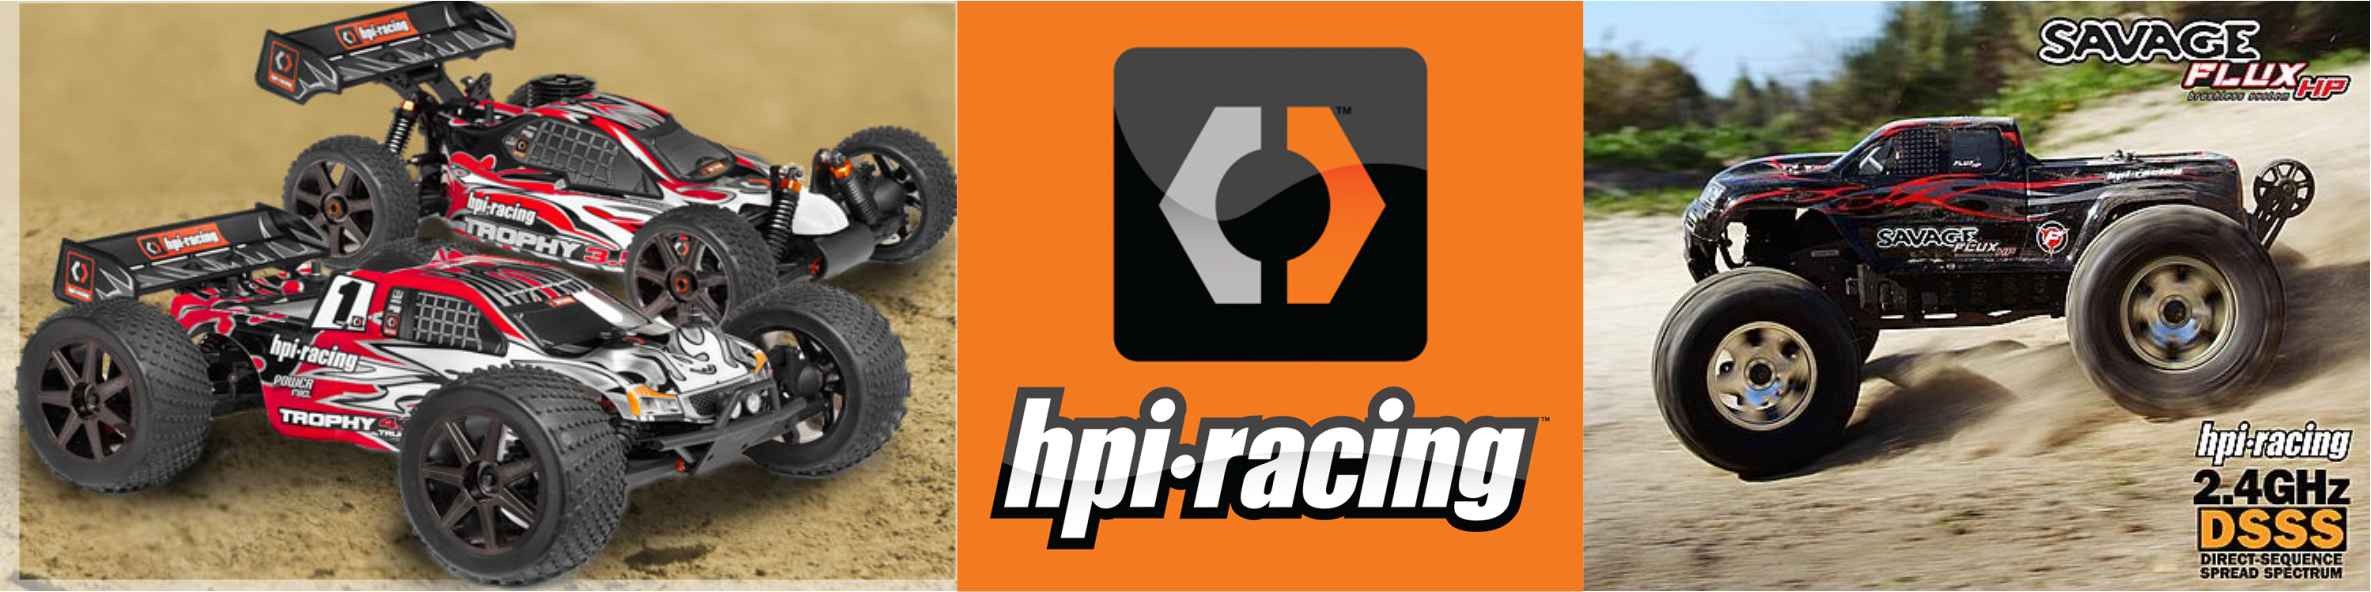 HPI-Racing